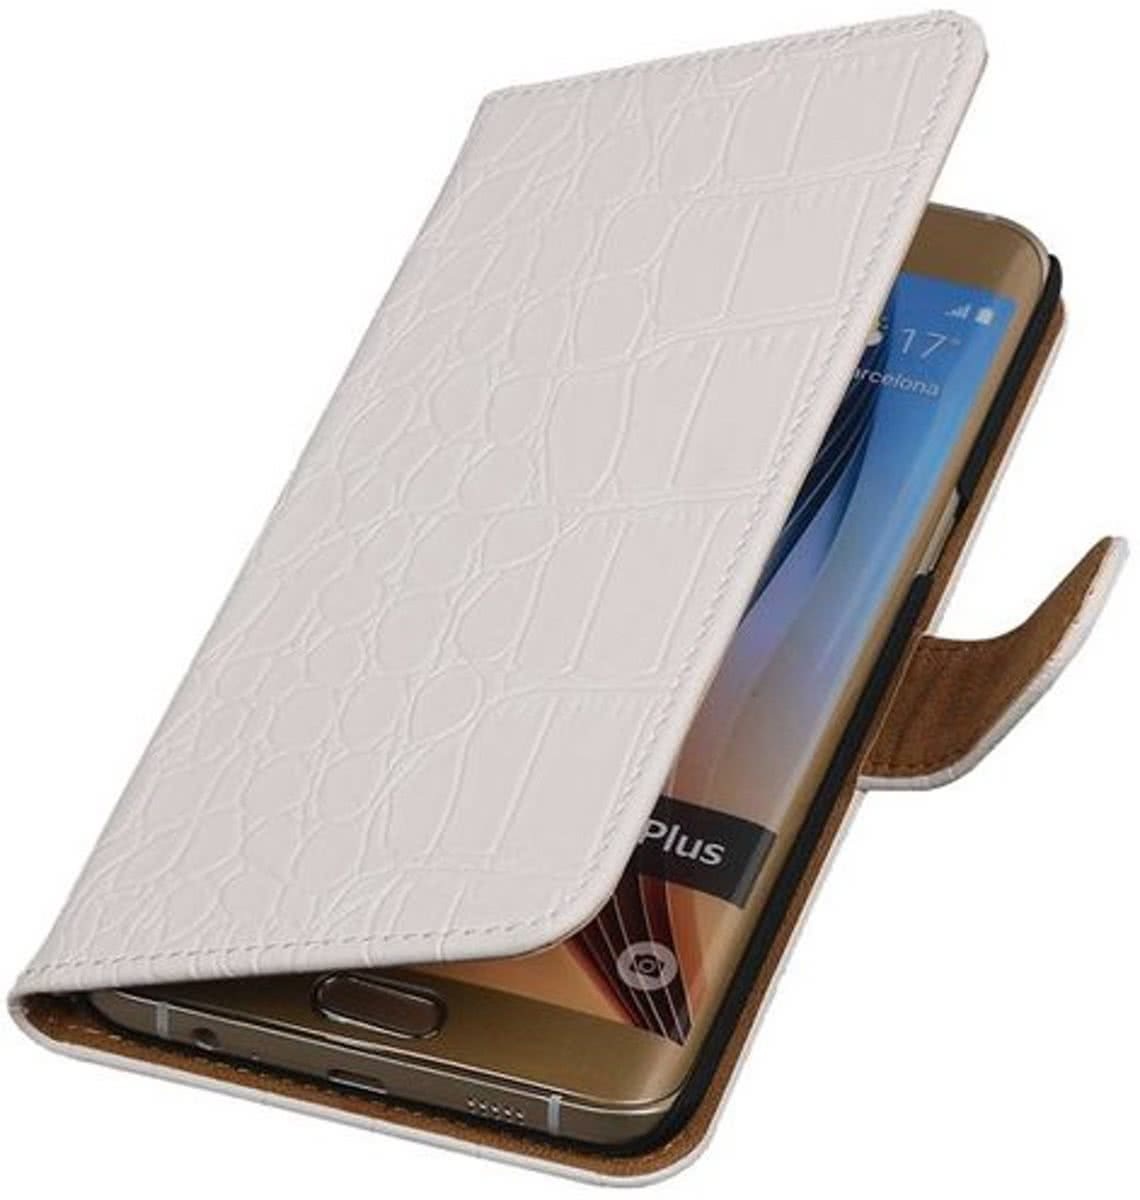 Best Cases Krokodil Wit Hoesje - Samsung Galaxy S6 edge Plus - Book Case Wallet Cover Beschermhoes Gratis verzending & retour Bestellen en betalen via bol.com